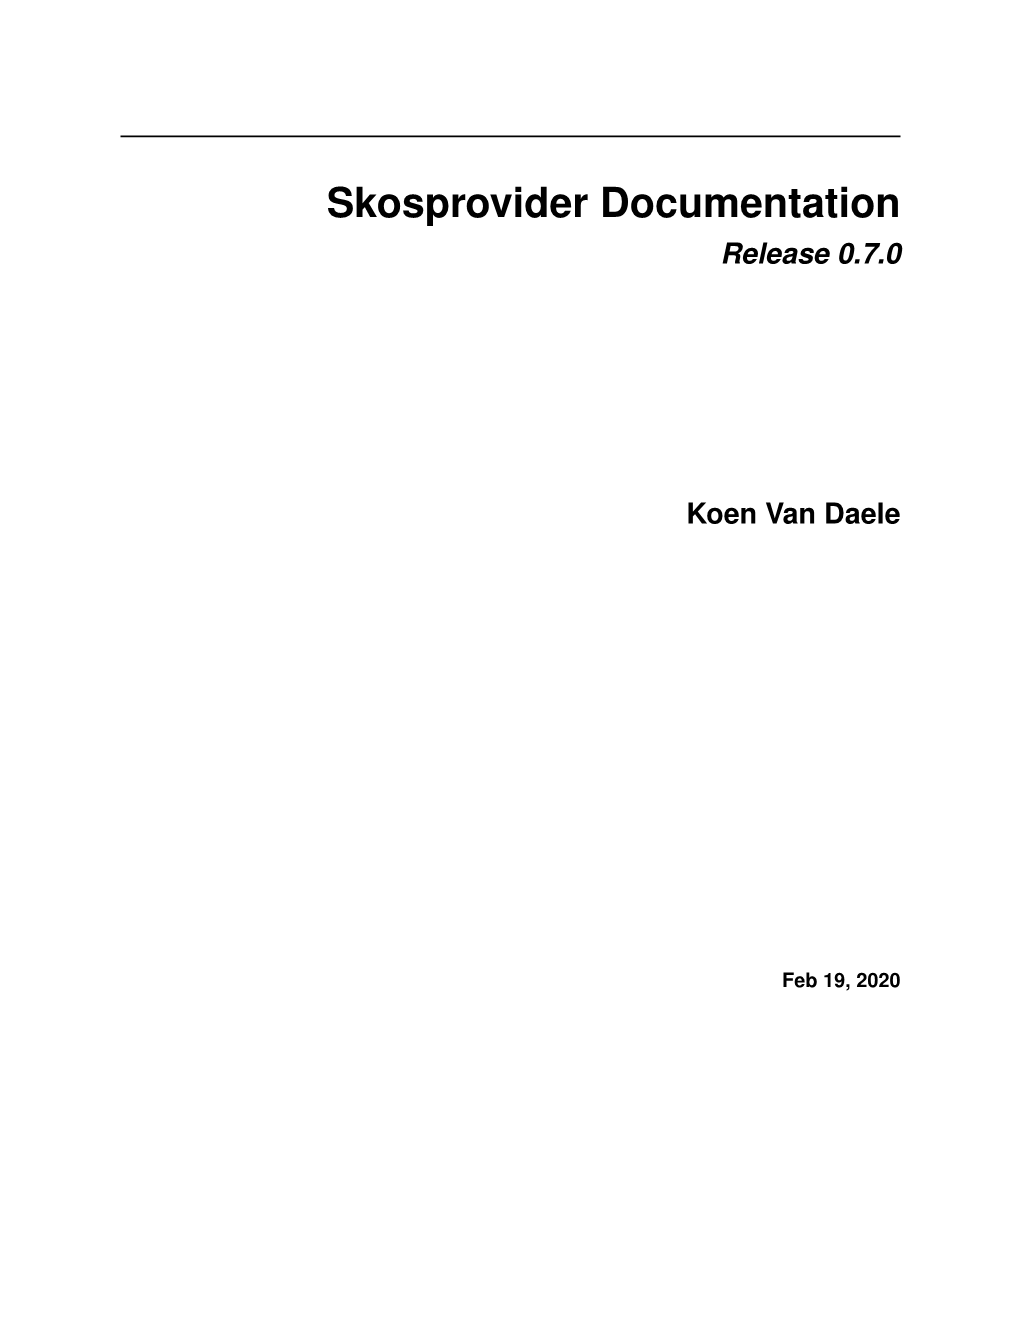 Skosprovider Documentation Release 0.7.0